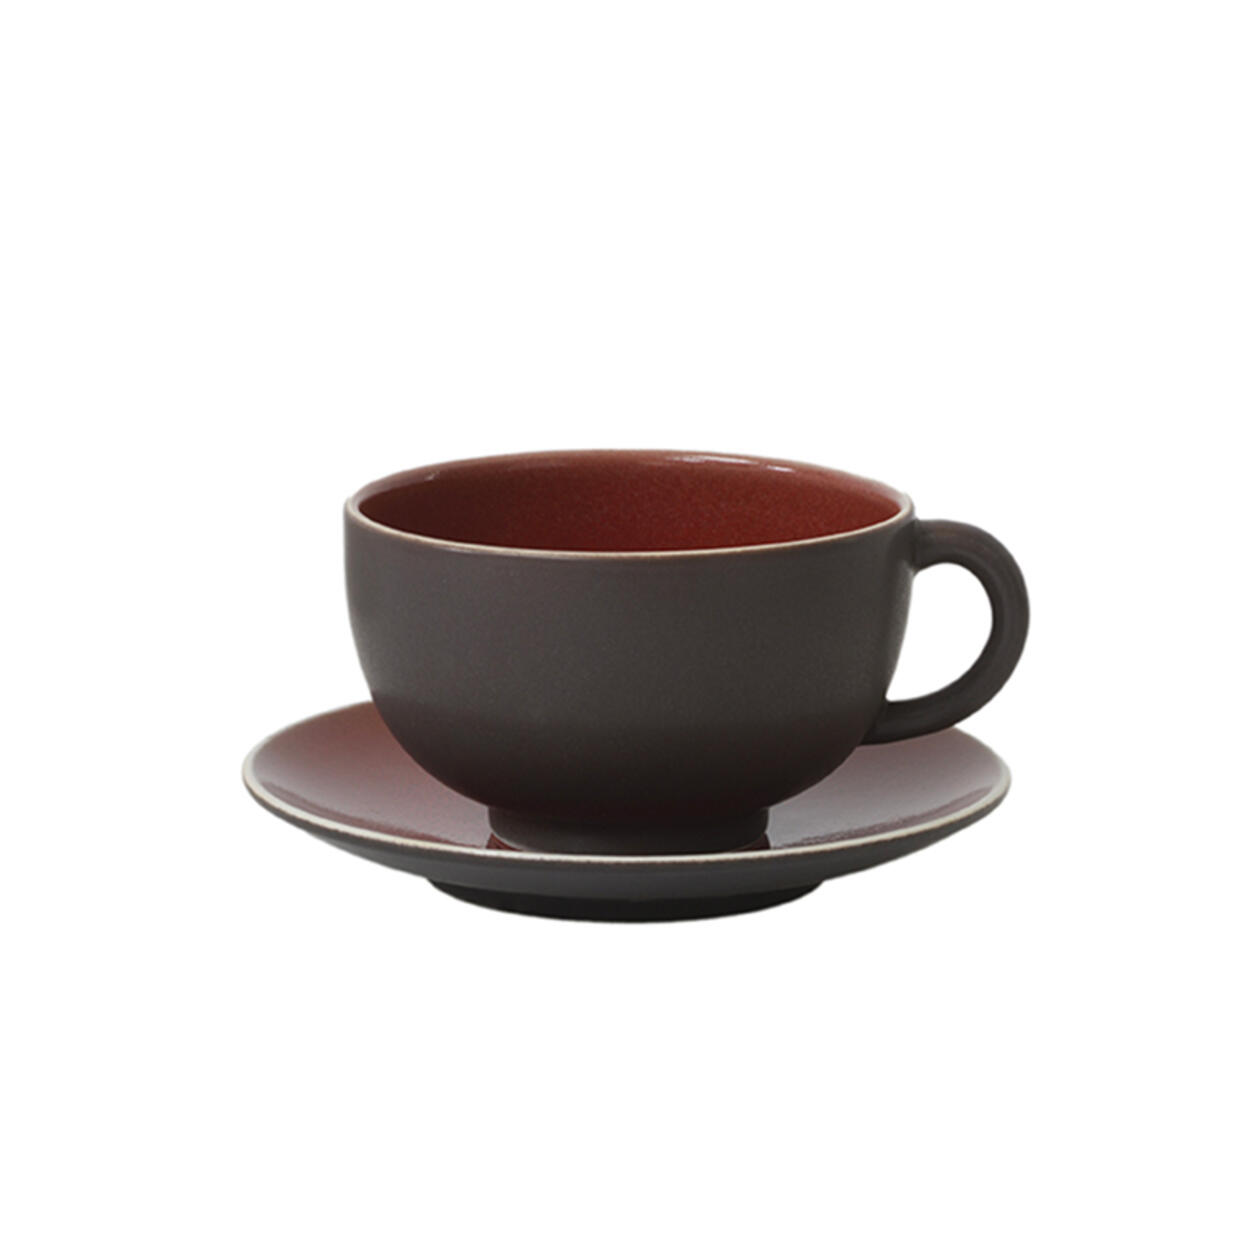 cup & saucer - l tourron cerise ceramic manufacturer